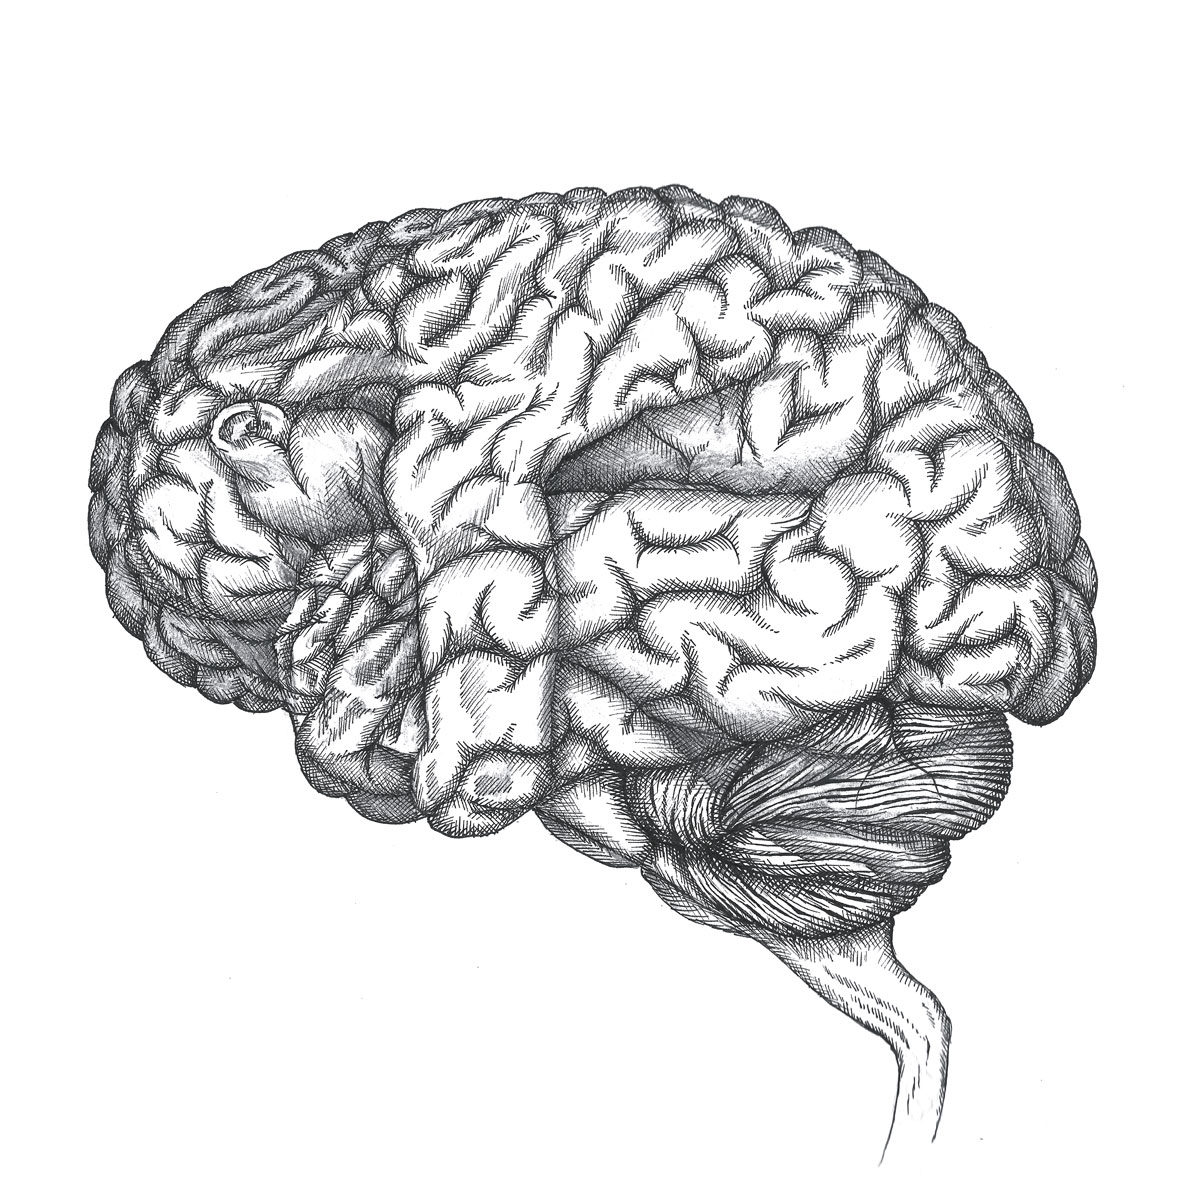 Fetal Brain illustration by Zach Johnson